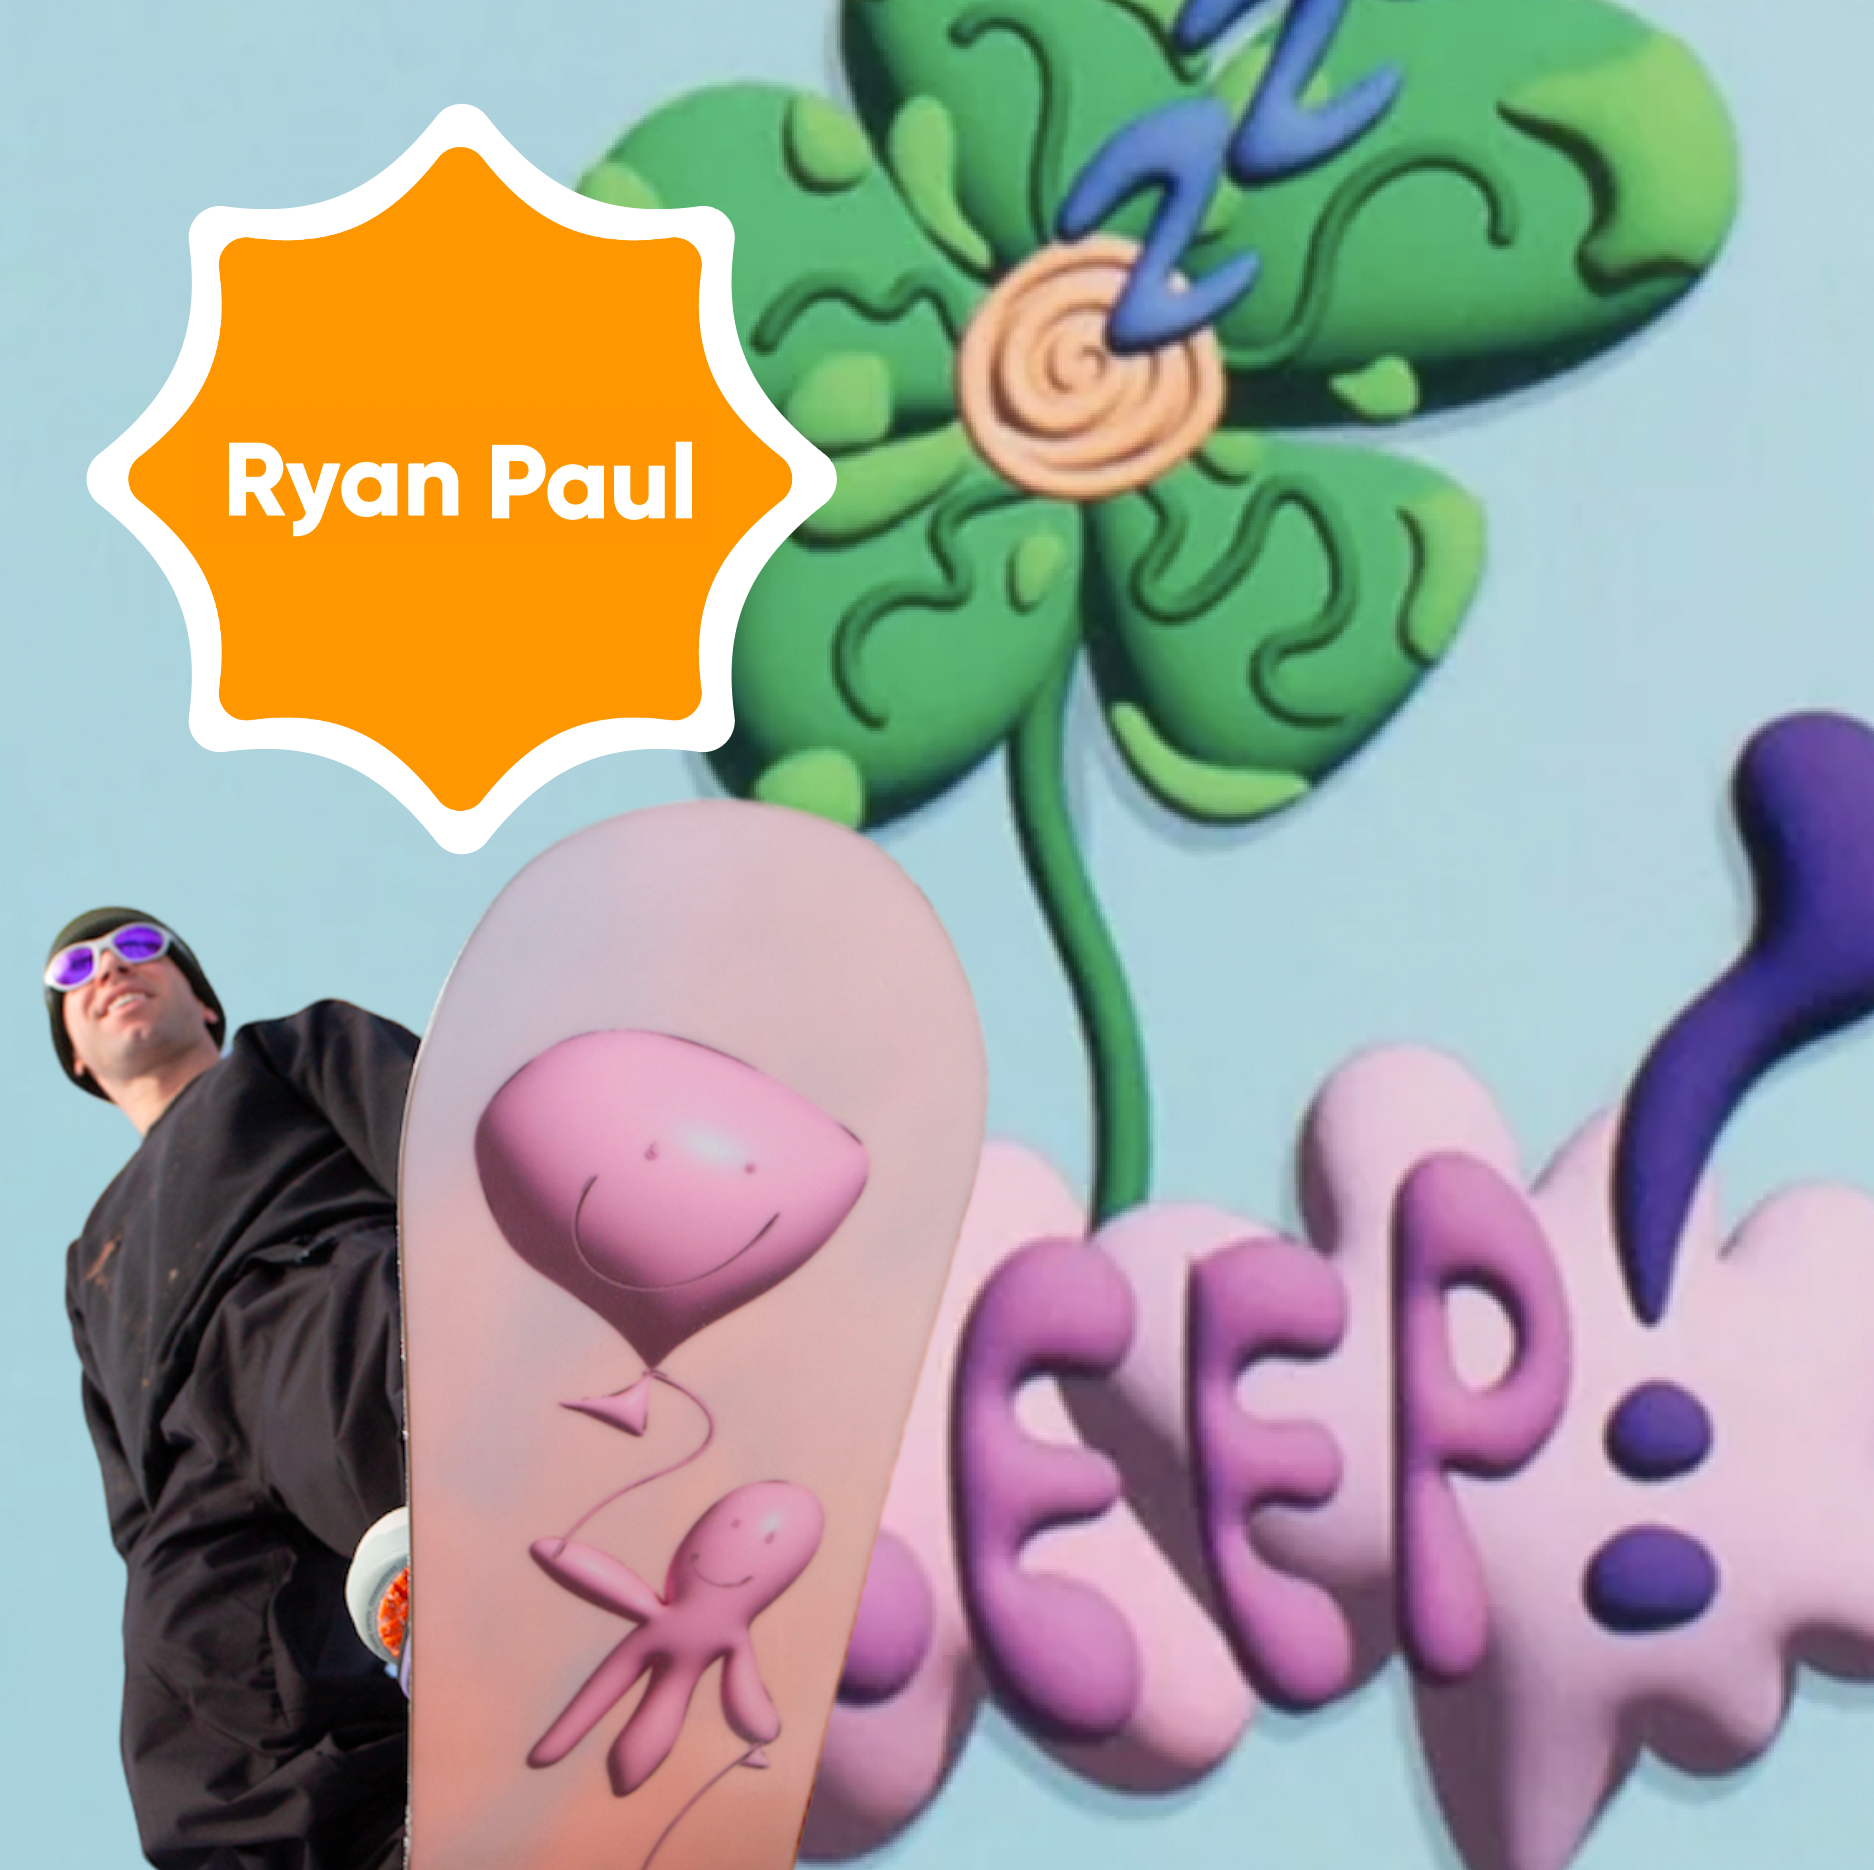 RYAN PAUL